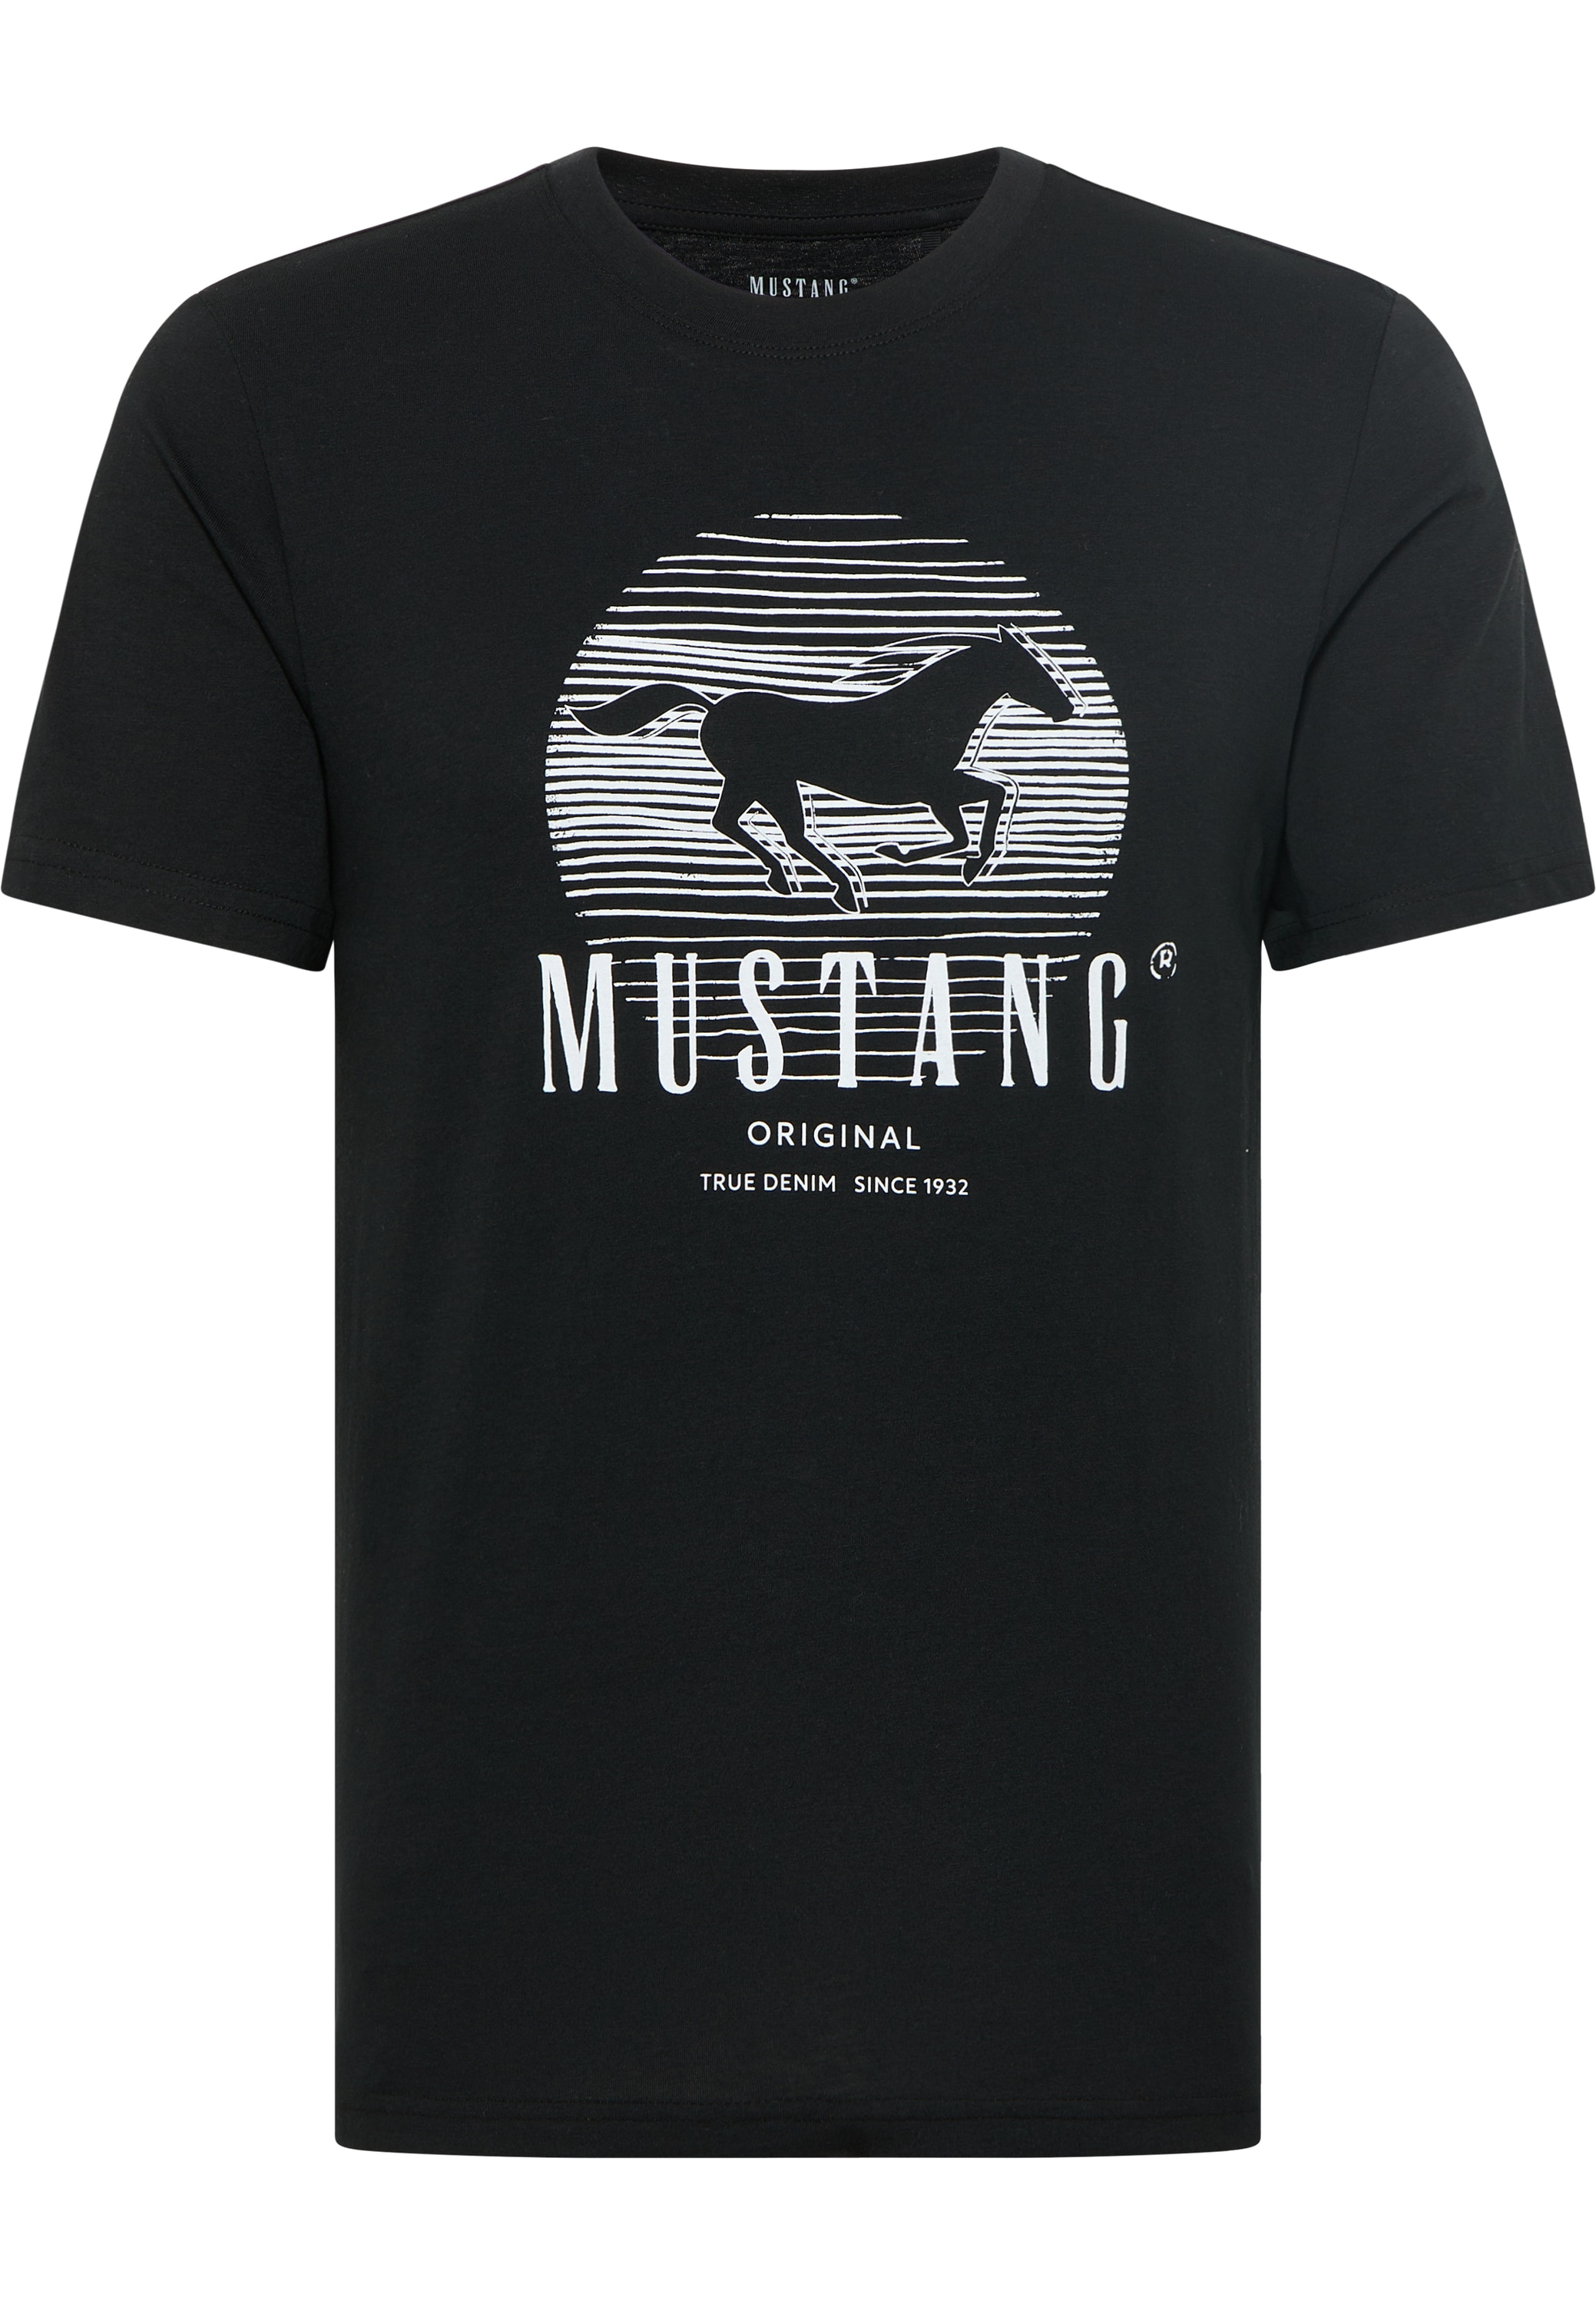 Mustang online bestellen bei OTTO